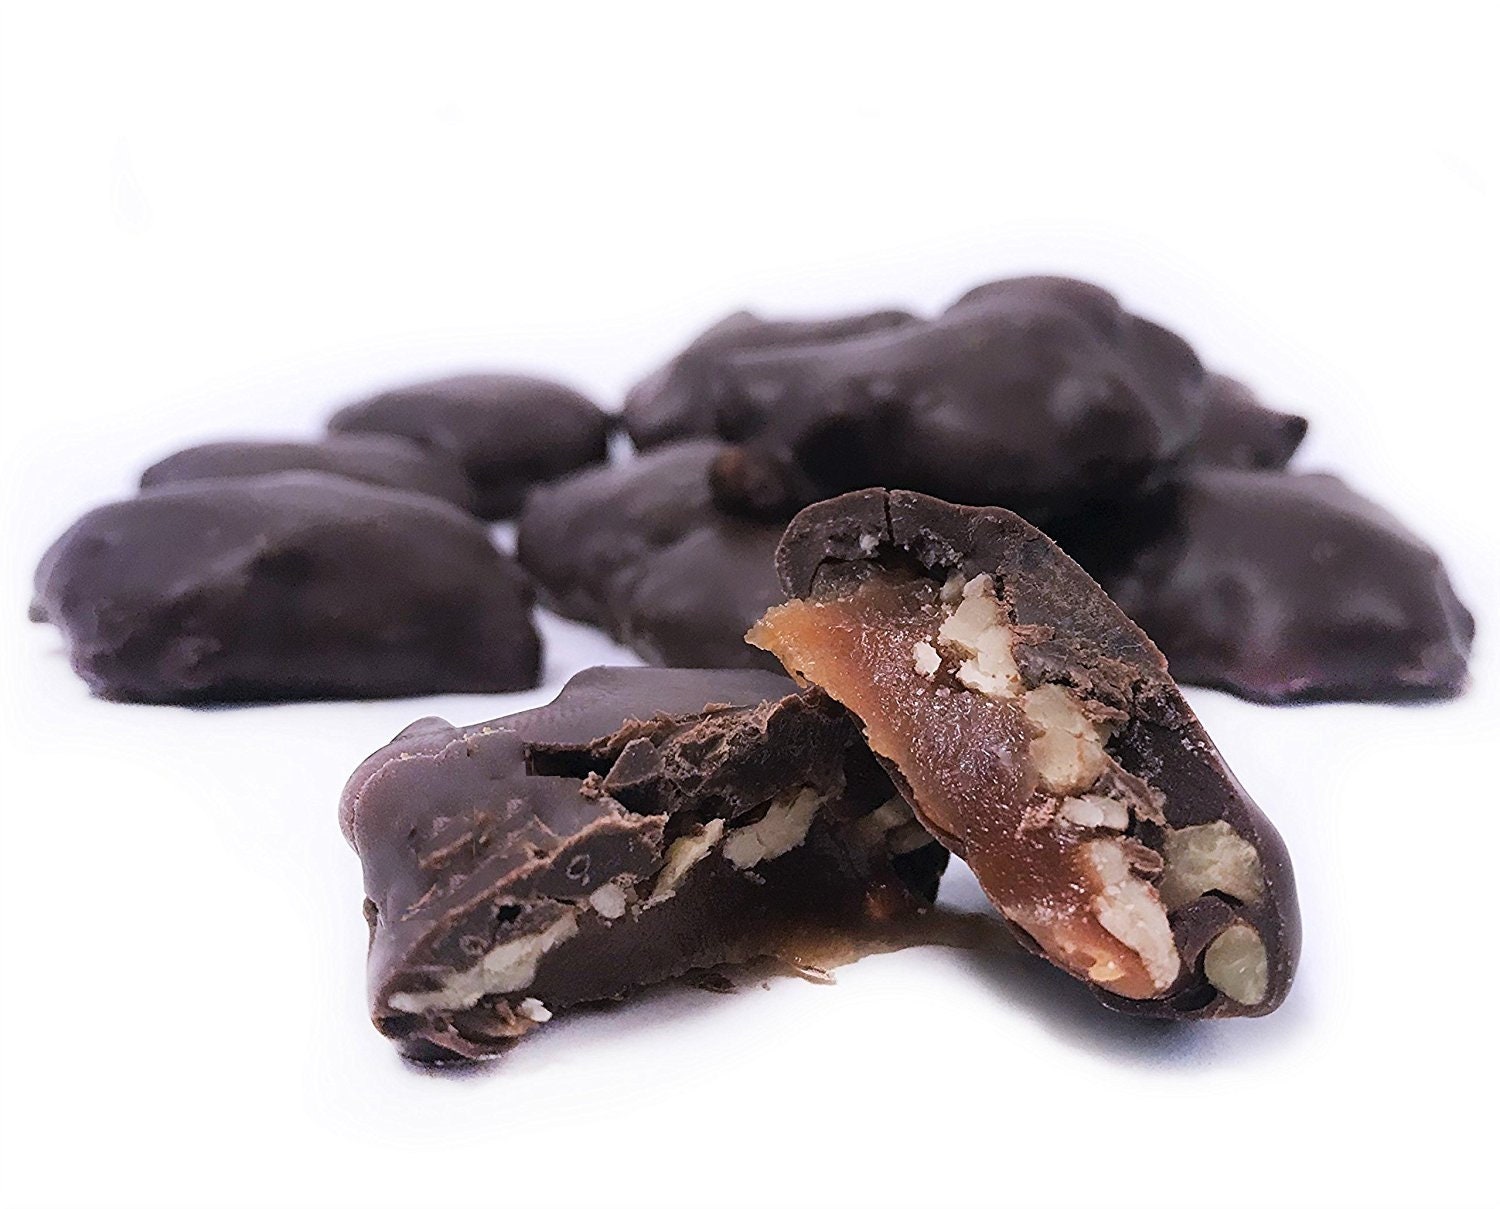 Sugar Free Dark Chocolate Almonds - 2 lbs.